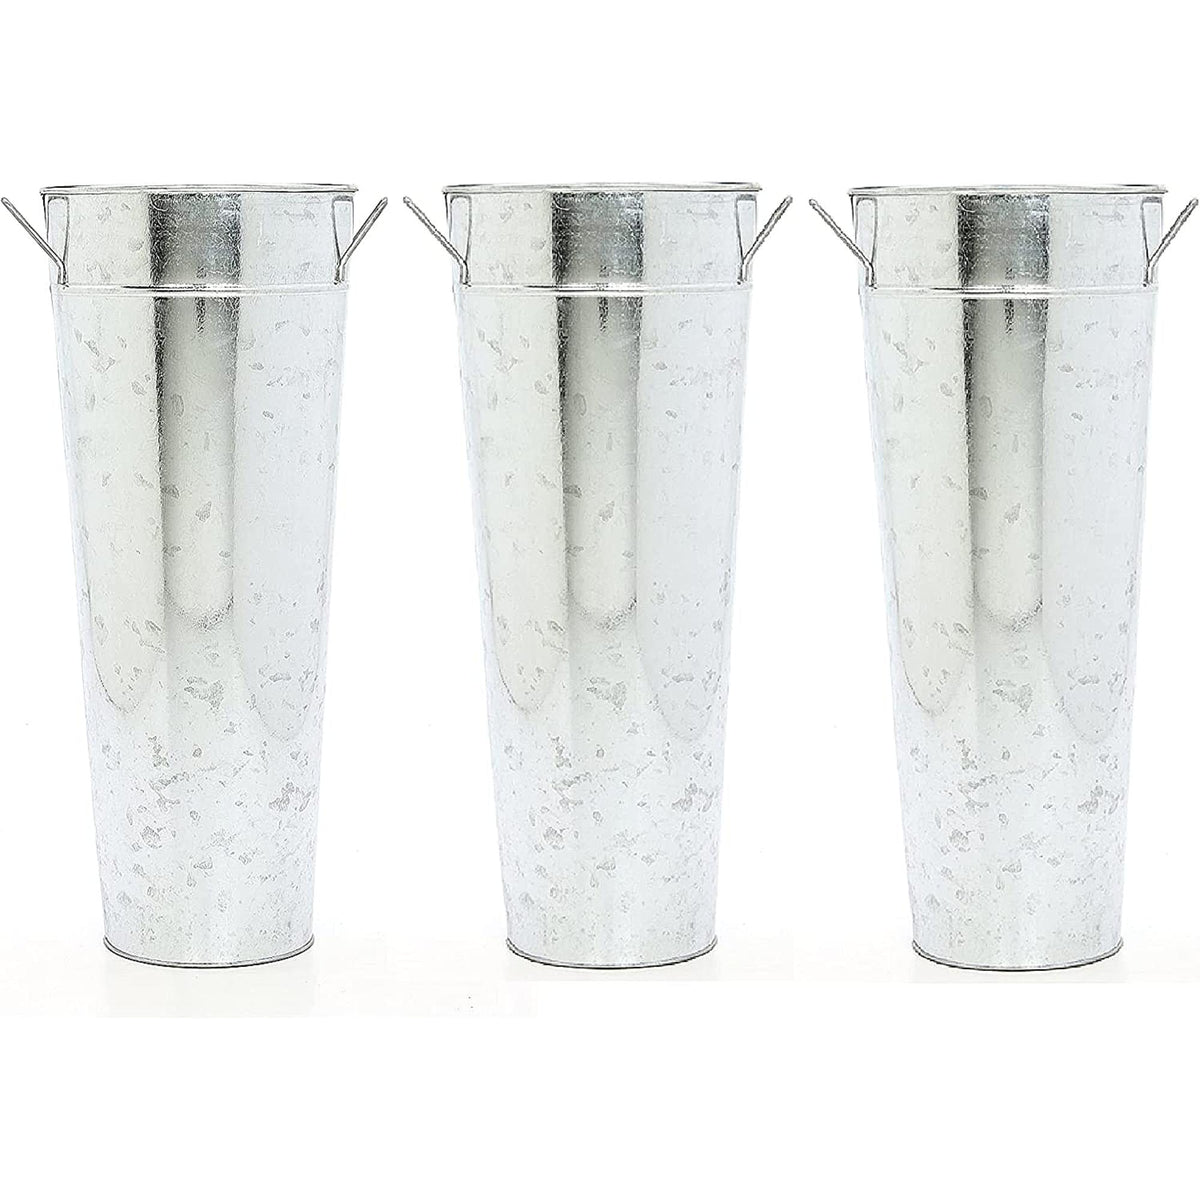 HOSLEY® Iron Galvanized Vase, Set of 3 , 15 inches High each